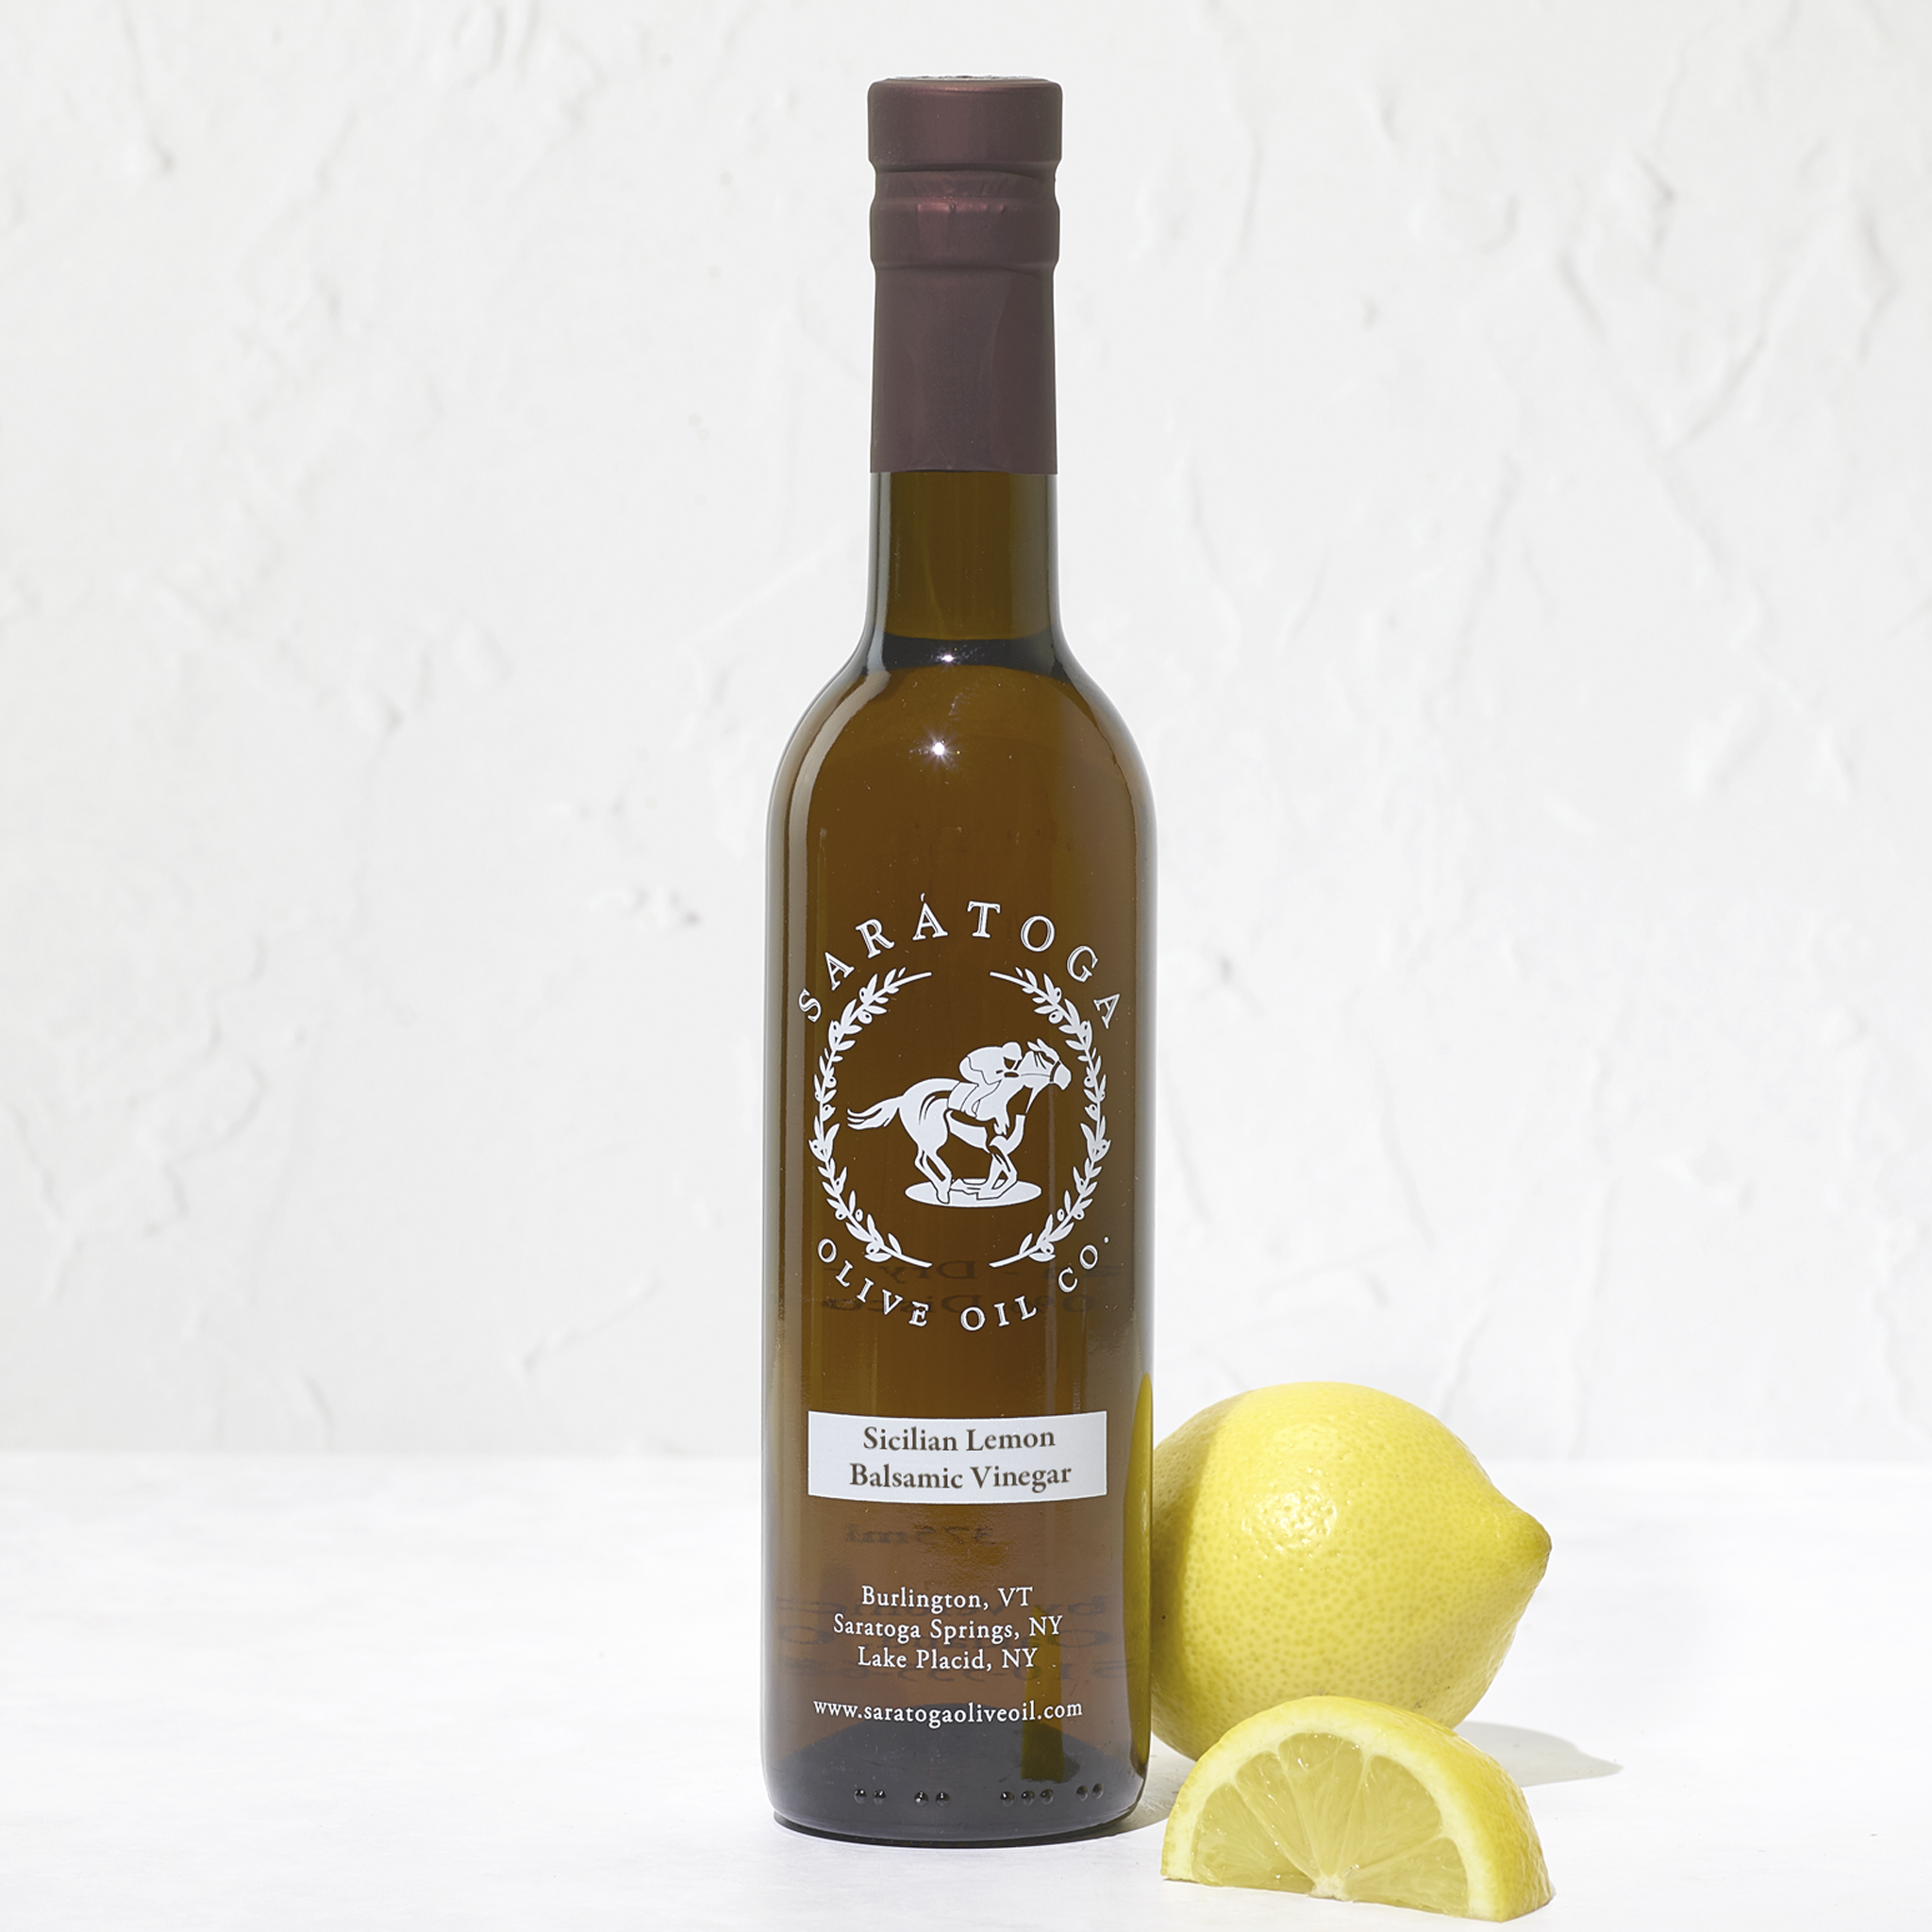 Sicilian Lemon White Balsamic Vinegar - Staunton Olive Oil Company